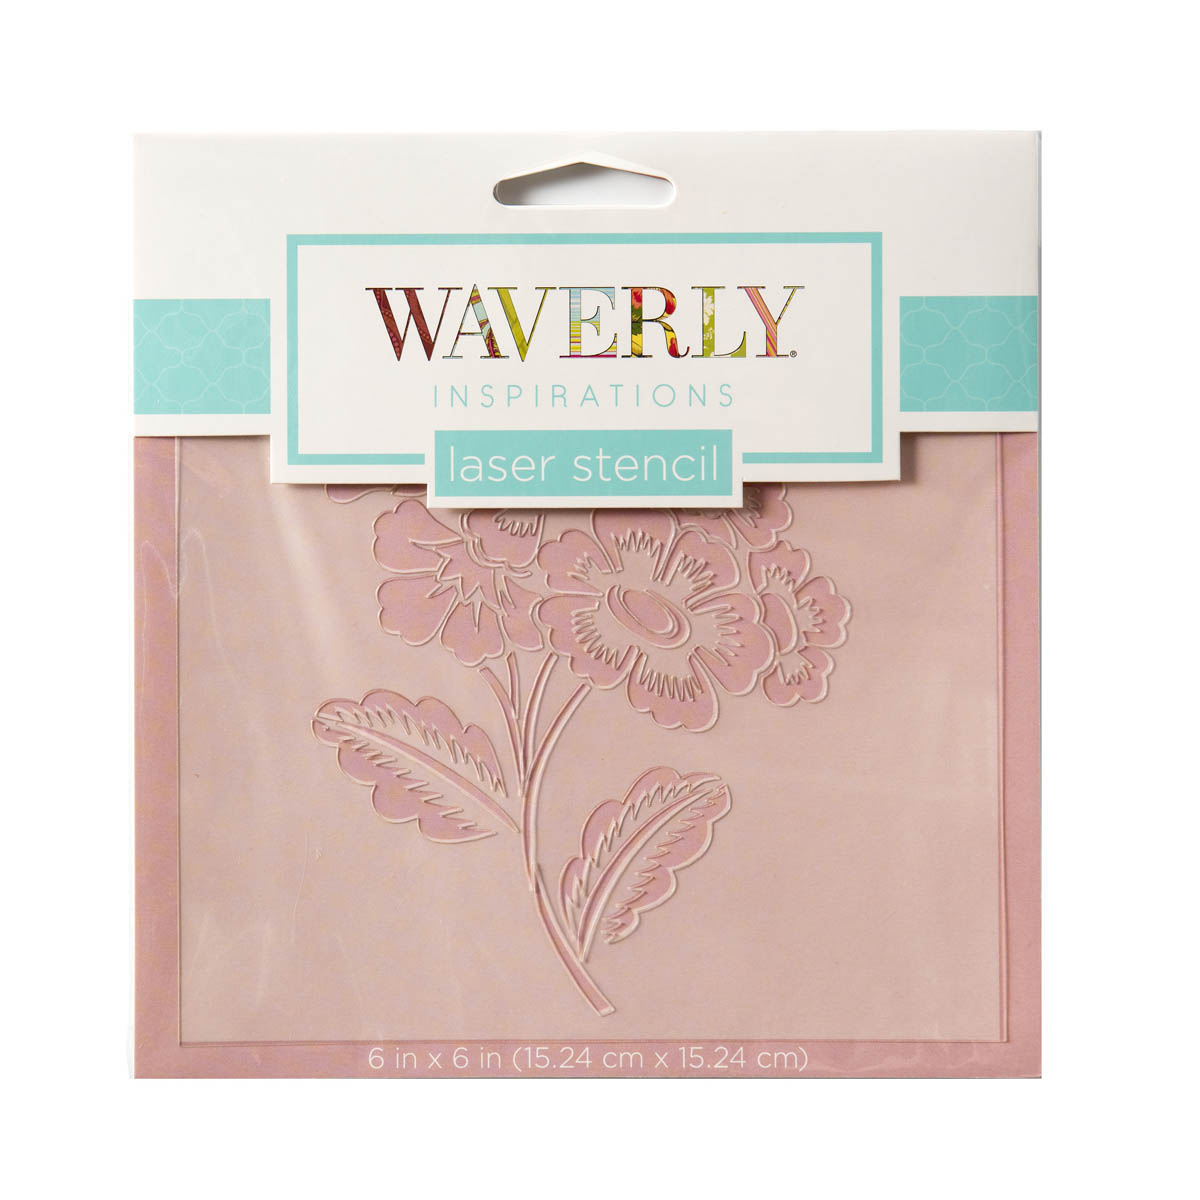 Waverly ® Inspirations Laser Stencils - Accent - Floral Sprig, 6